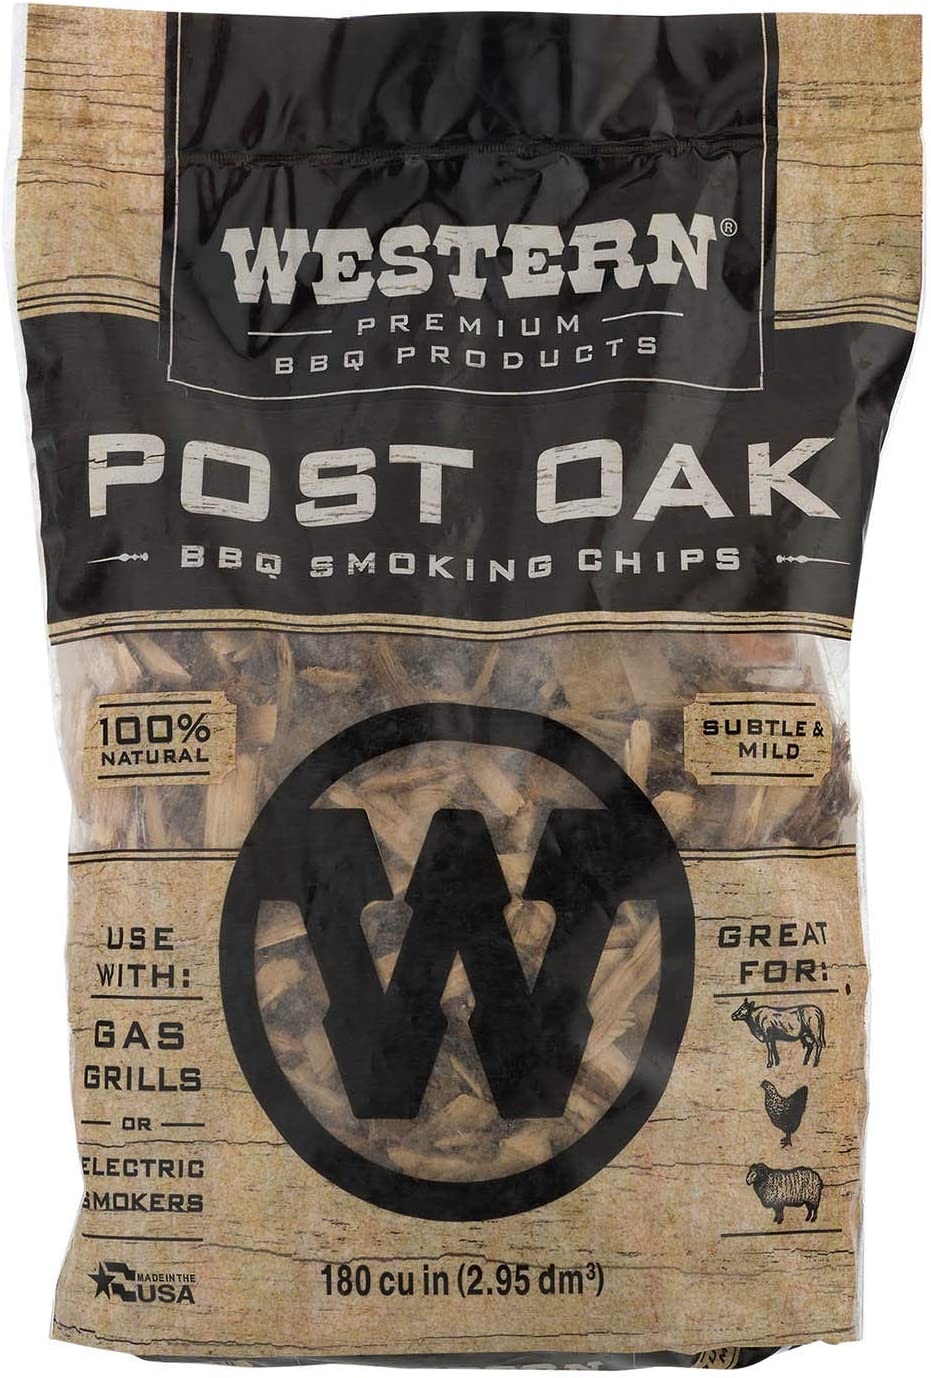 Western Premium BBQ Products Post Oak BBQ Smoking Chips